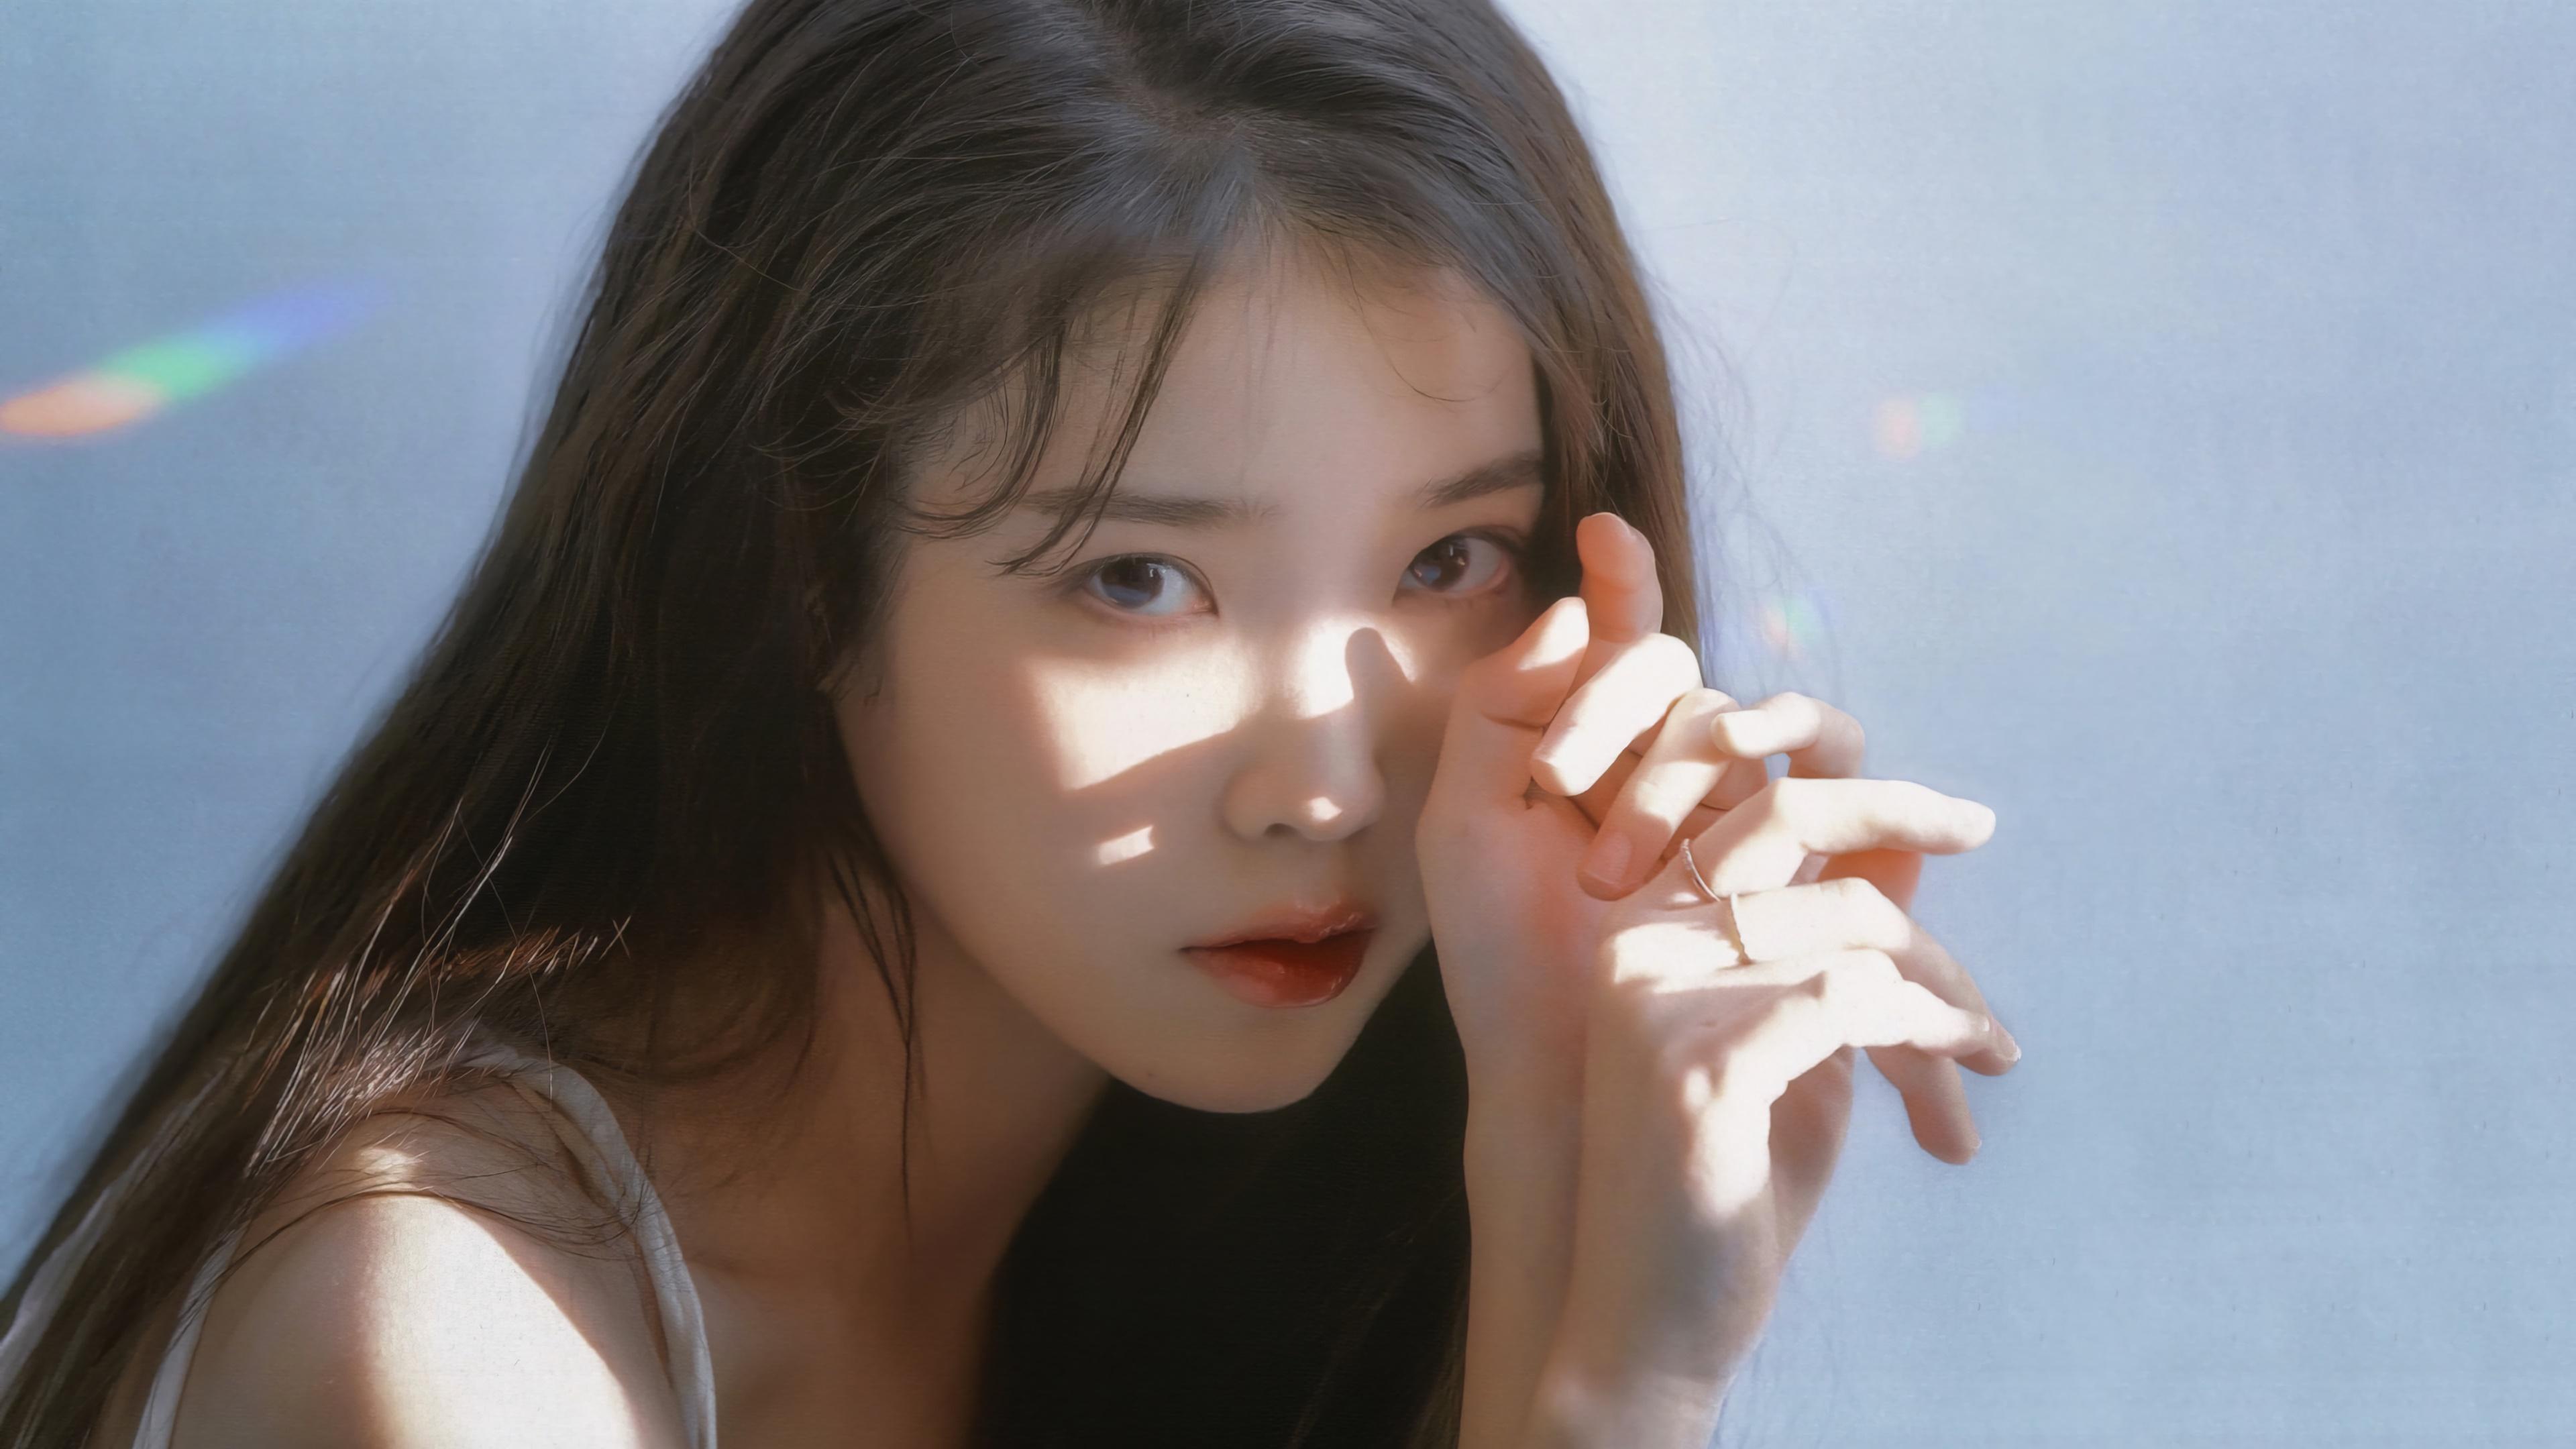 HD wallpaper, Lee Ji Eun, Iu, 4K, Wallpaper, Hd